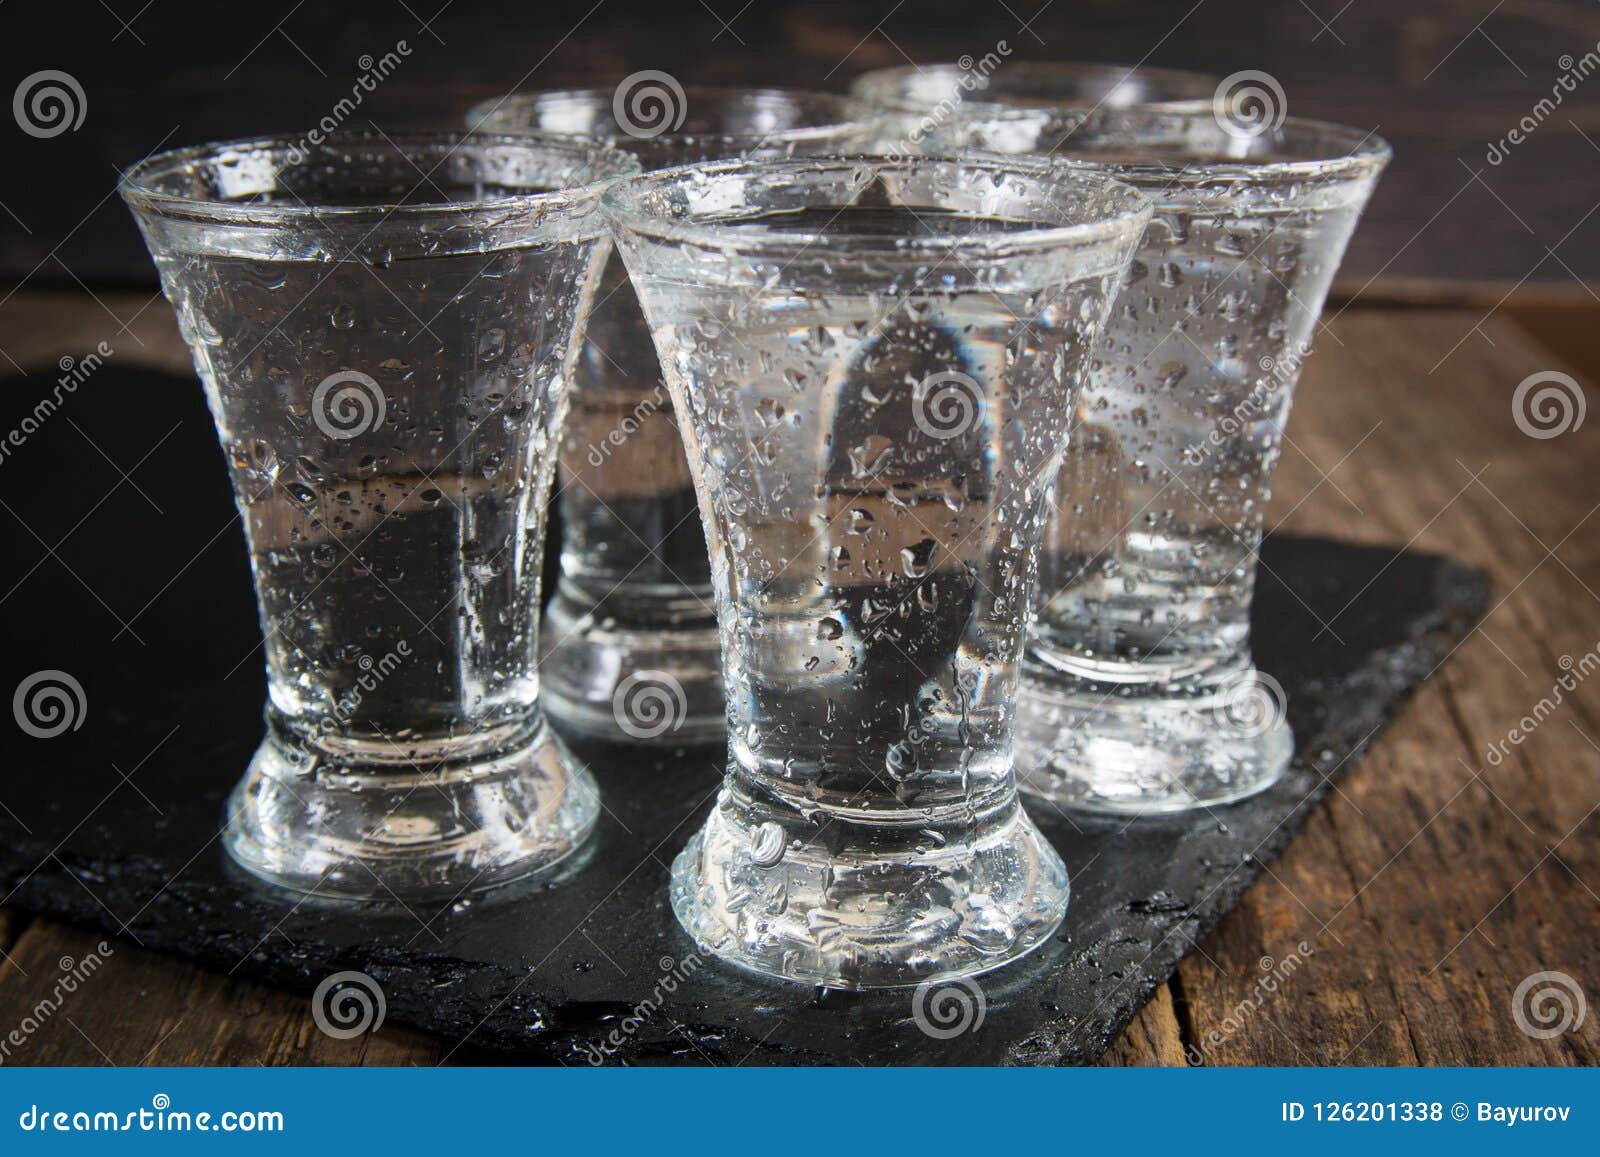 USSR Shot Glasses Set of 3 Made in Russia Vodka Tequila Shots 1.7 fl oz ea 